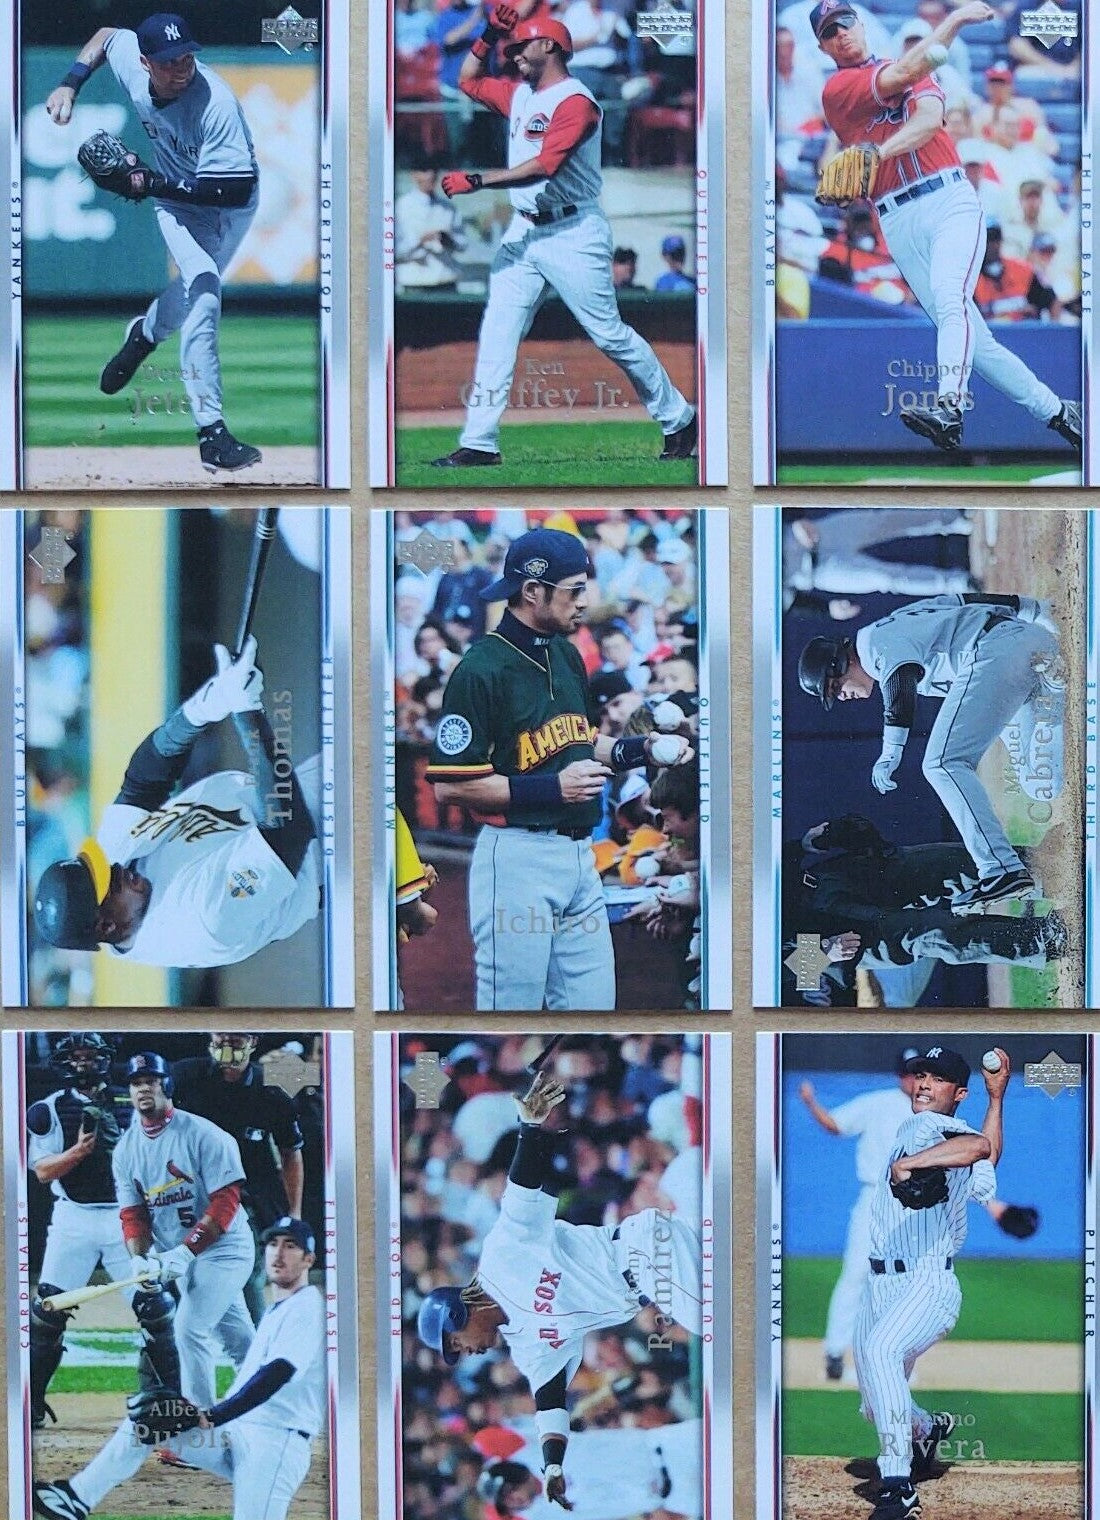  2004 Topps Baseball Card # 500 Ivan Rodriguez